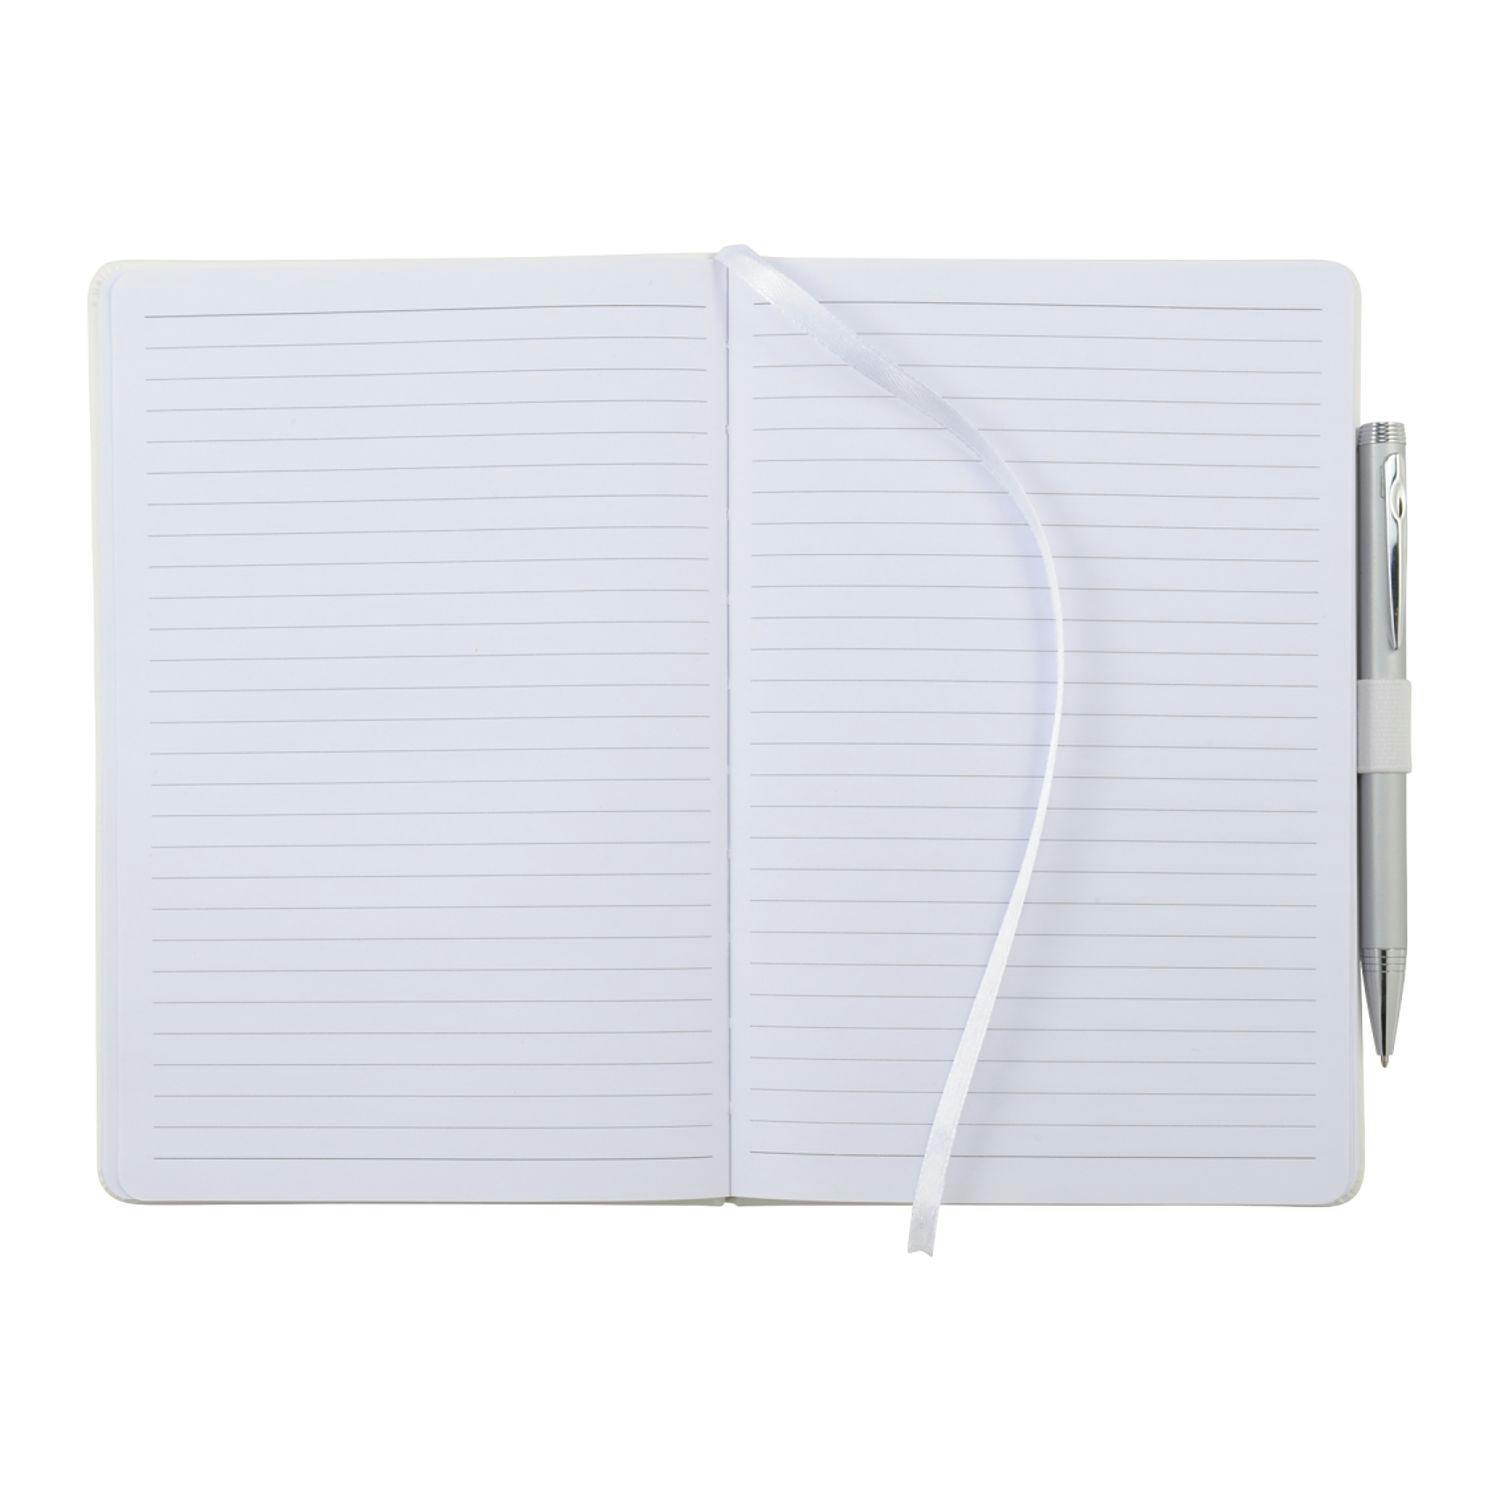 5.5" x 8.5" Nova Bound JournalBook® - additional Image 1